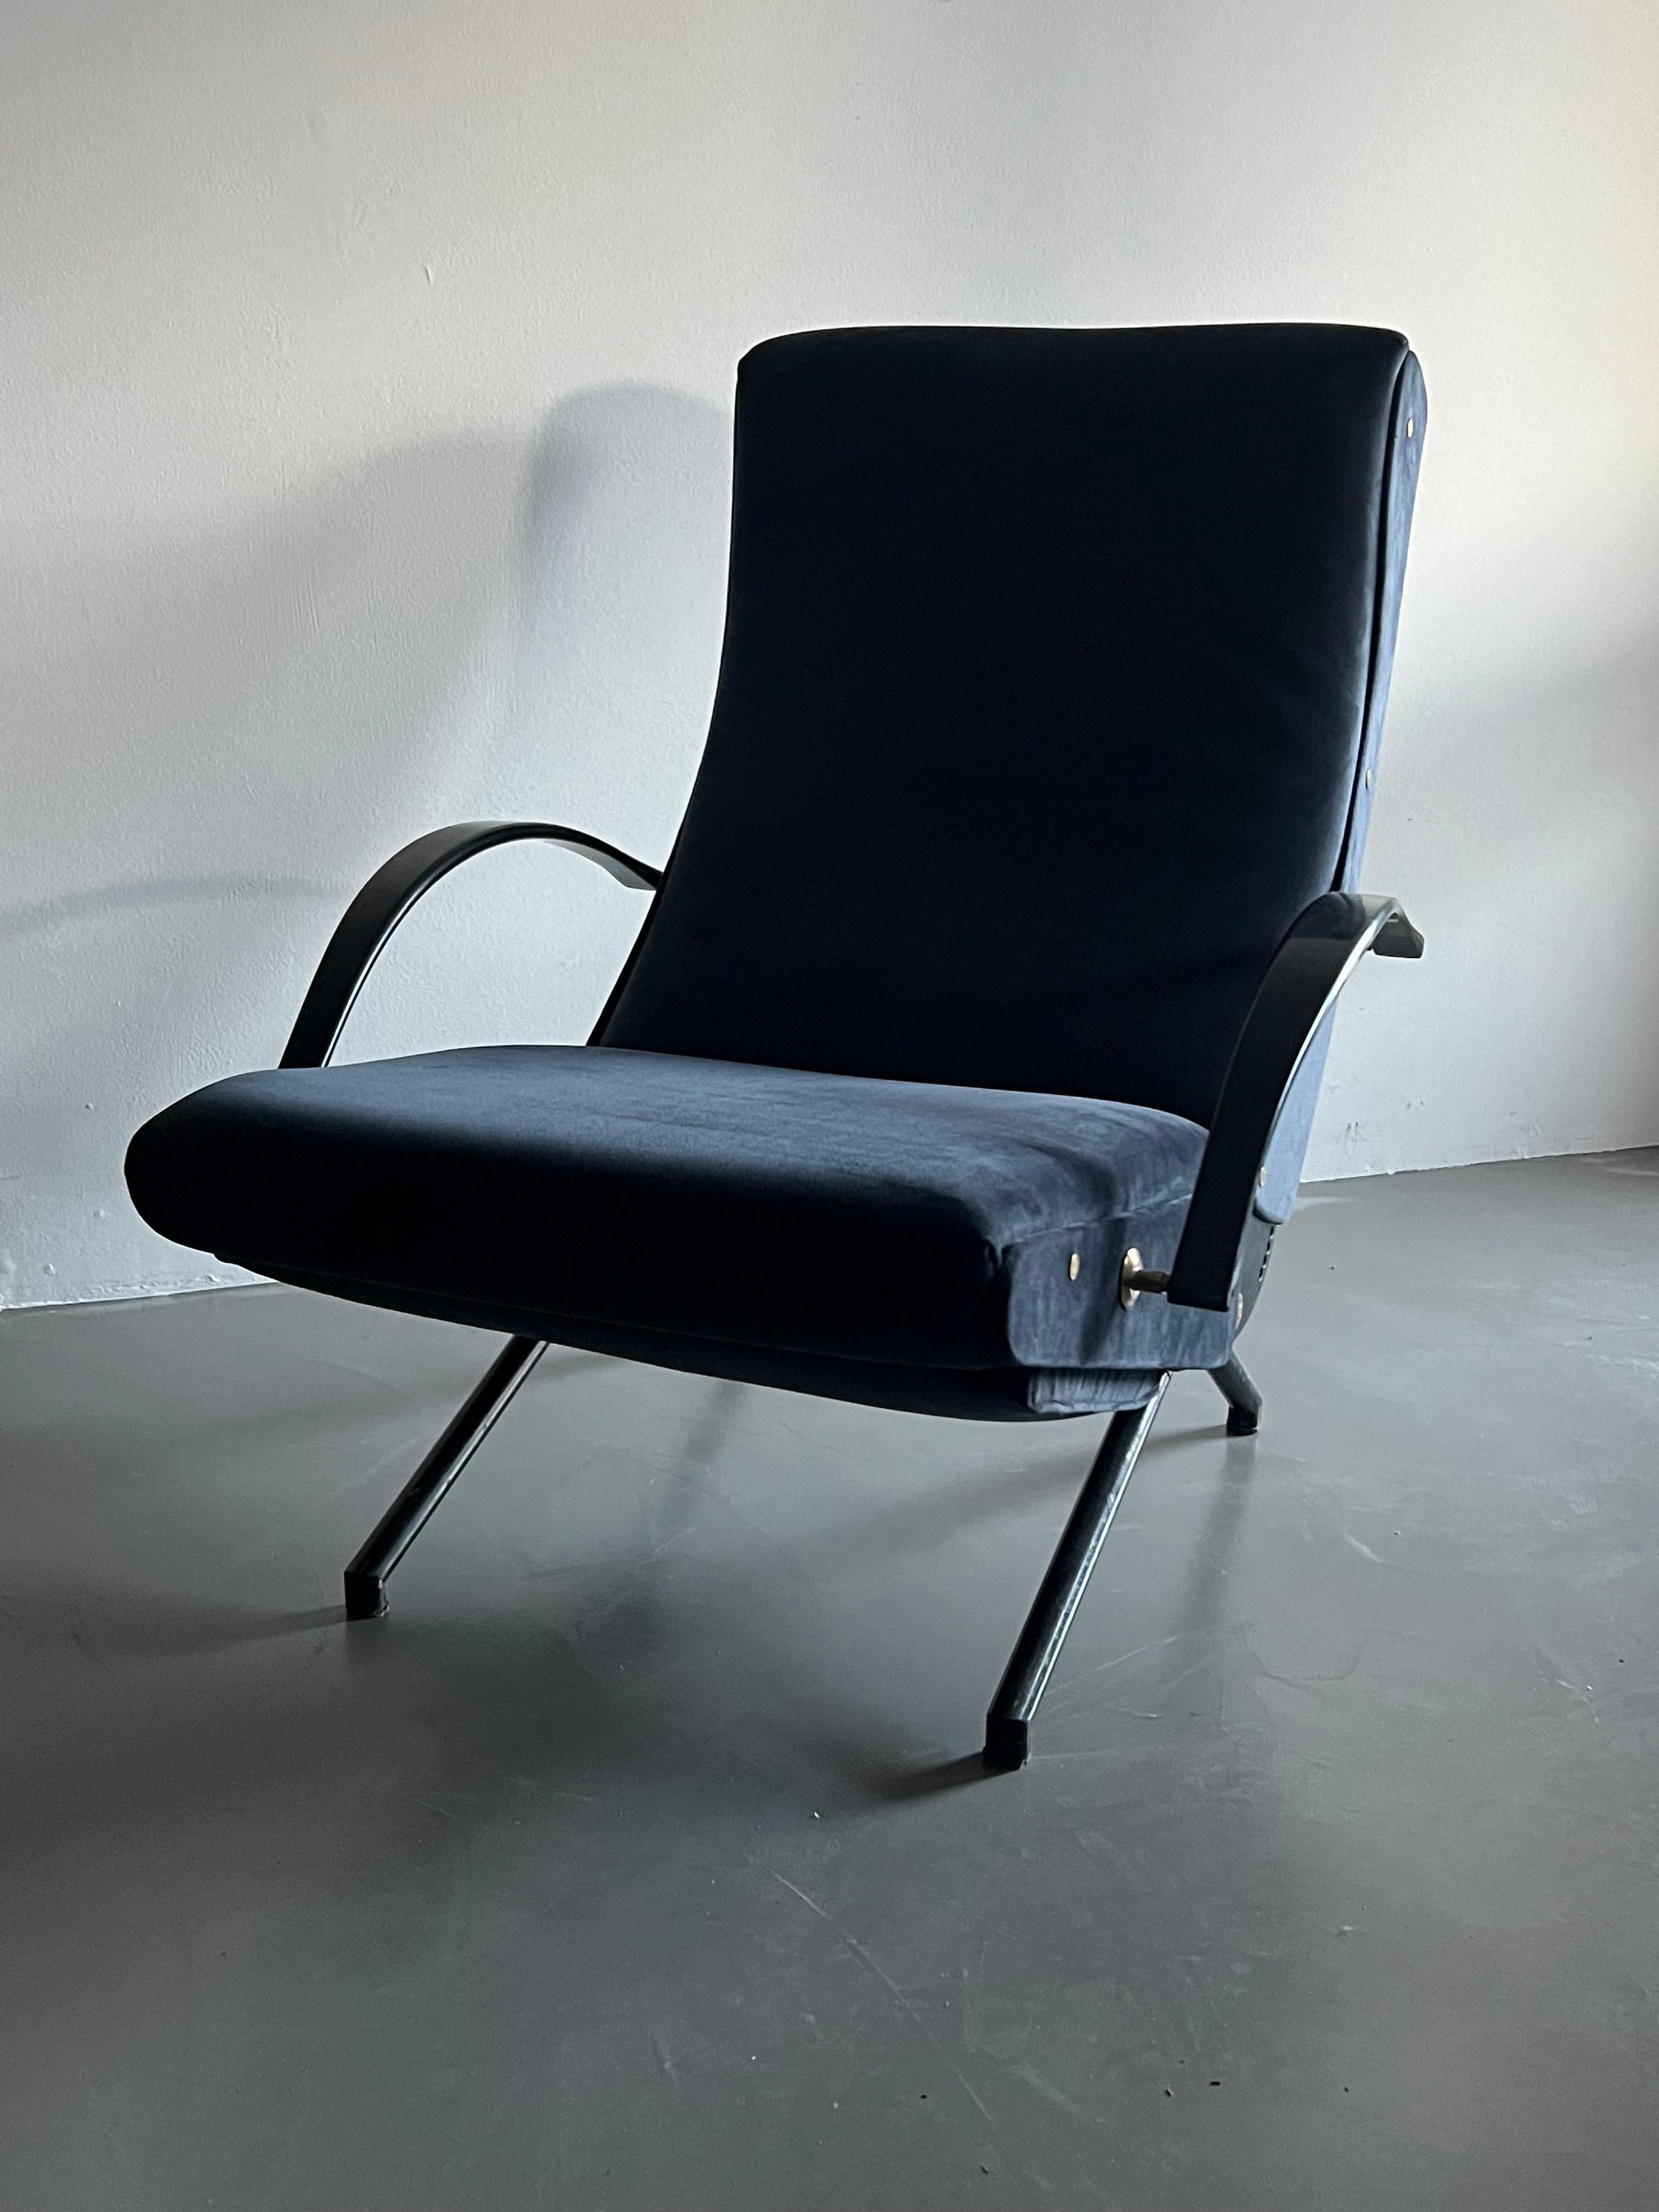 Borsani P40 Lounge Chair - Italian Collectible Furniture - Mid Century Armchair - Collectible Italian Mid Century

Designed in 1956 by Italian architect Osvaldo Borsani, the P40 lounge chair - where 